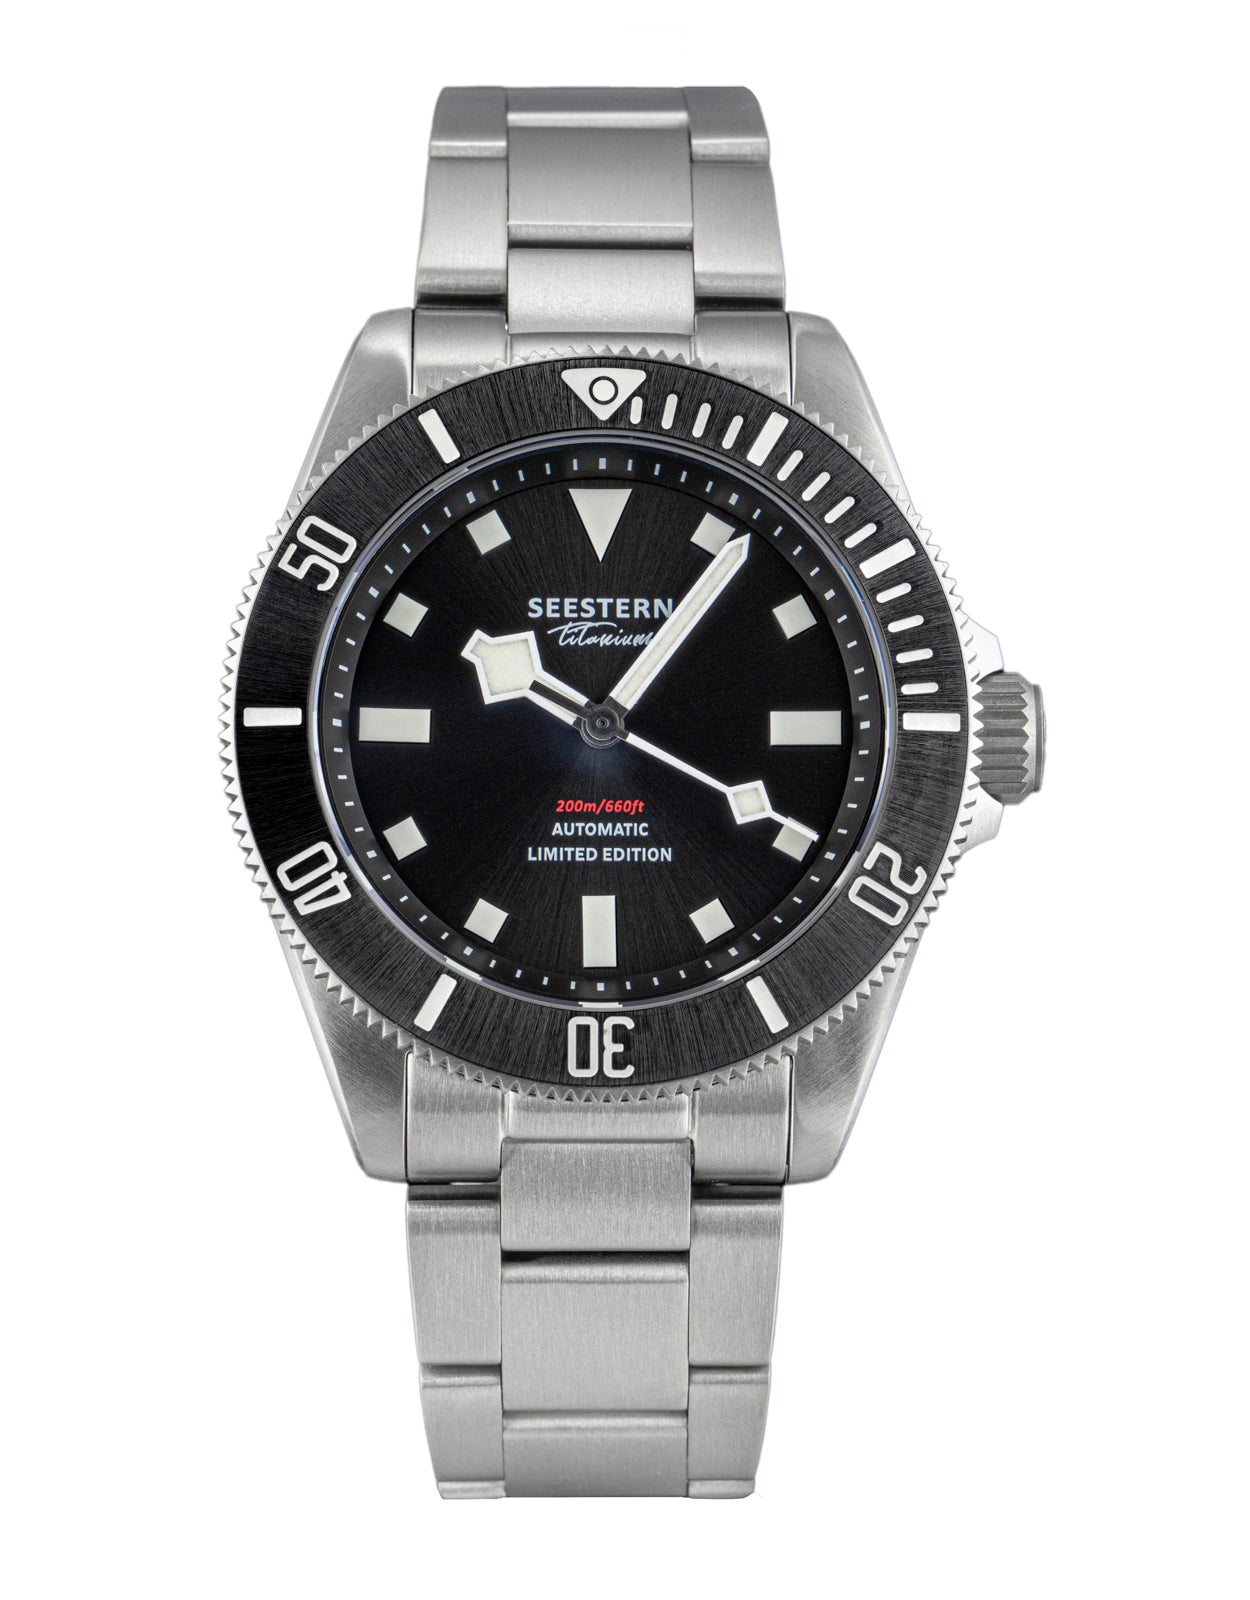 Seestern 430 Titanium Professional Diver (Seagull ST2130 movement)